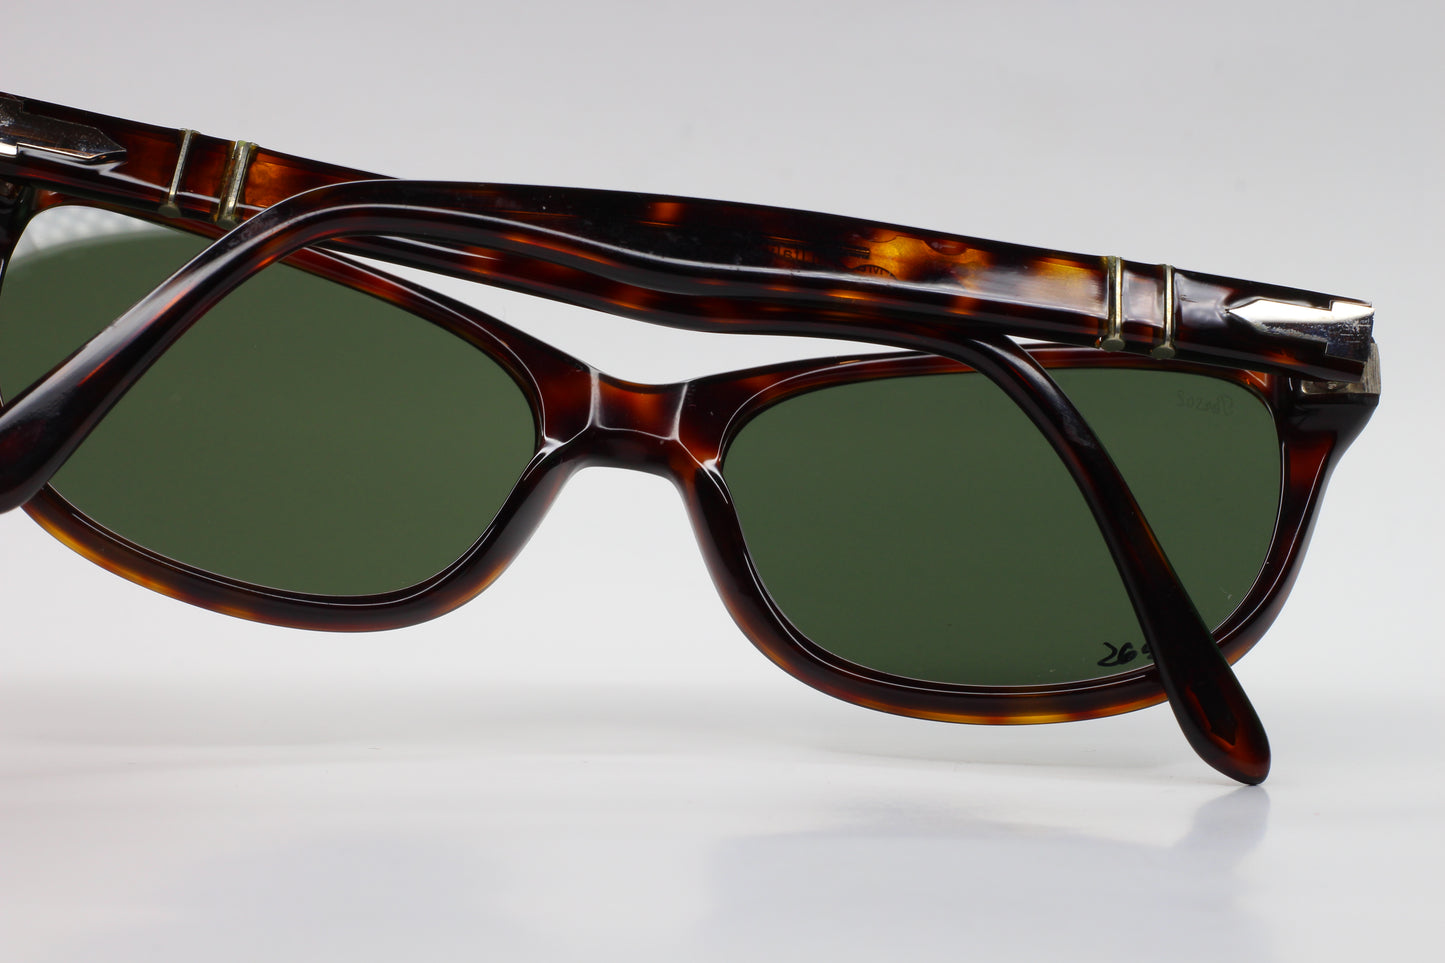 Persol PO3020S 24/31 Havana Tortoise Designer Sunglasses